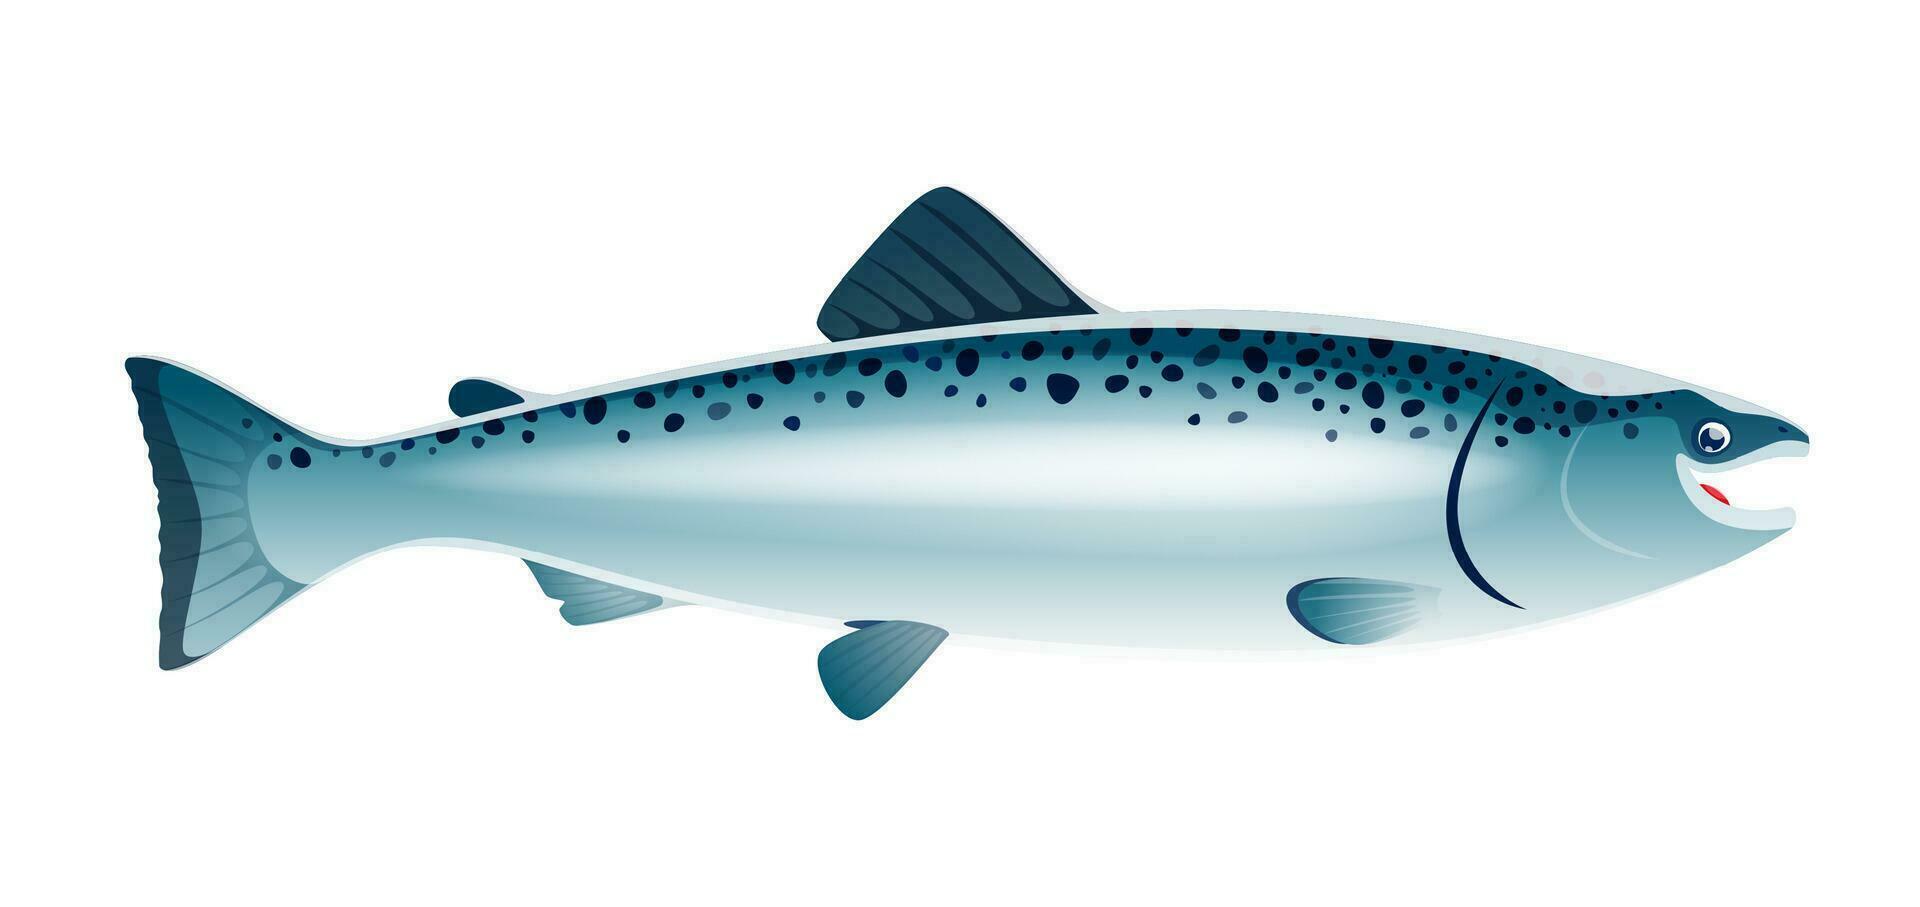 Cartoon salmon fish sea animal with sleek body vector